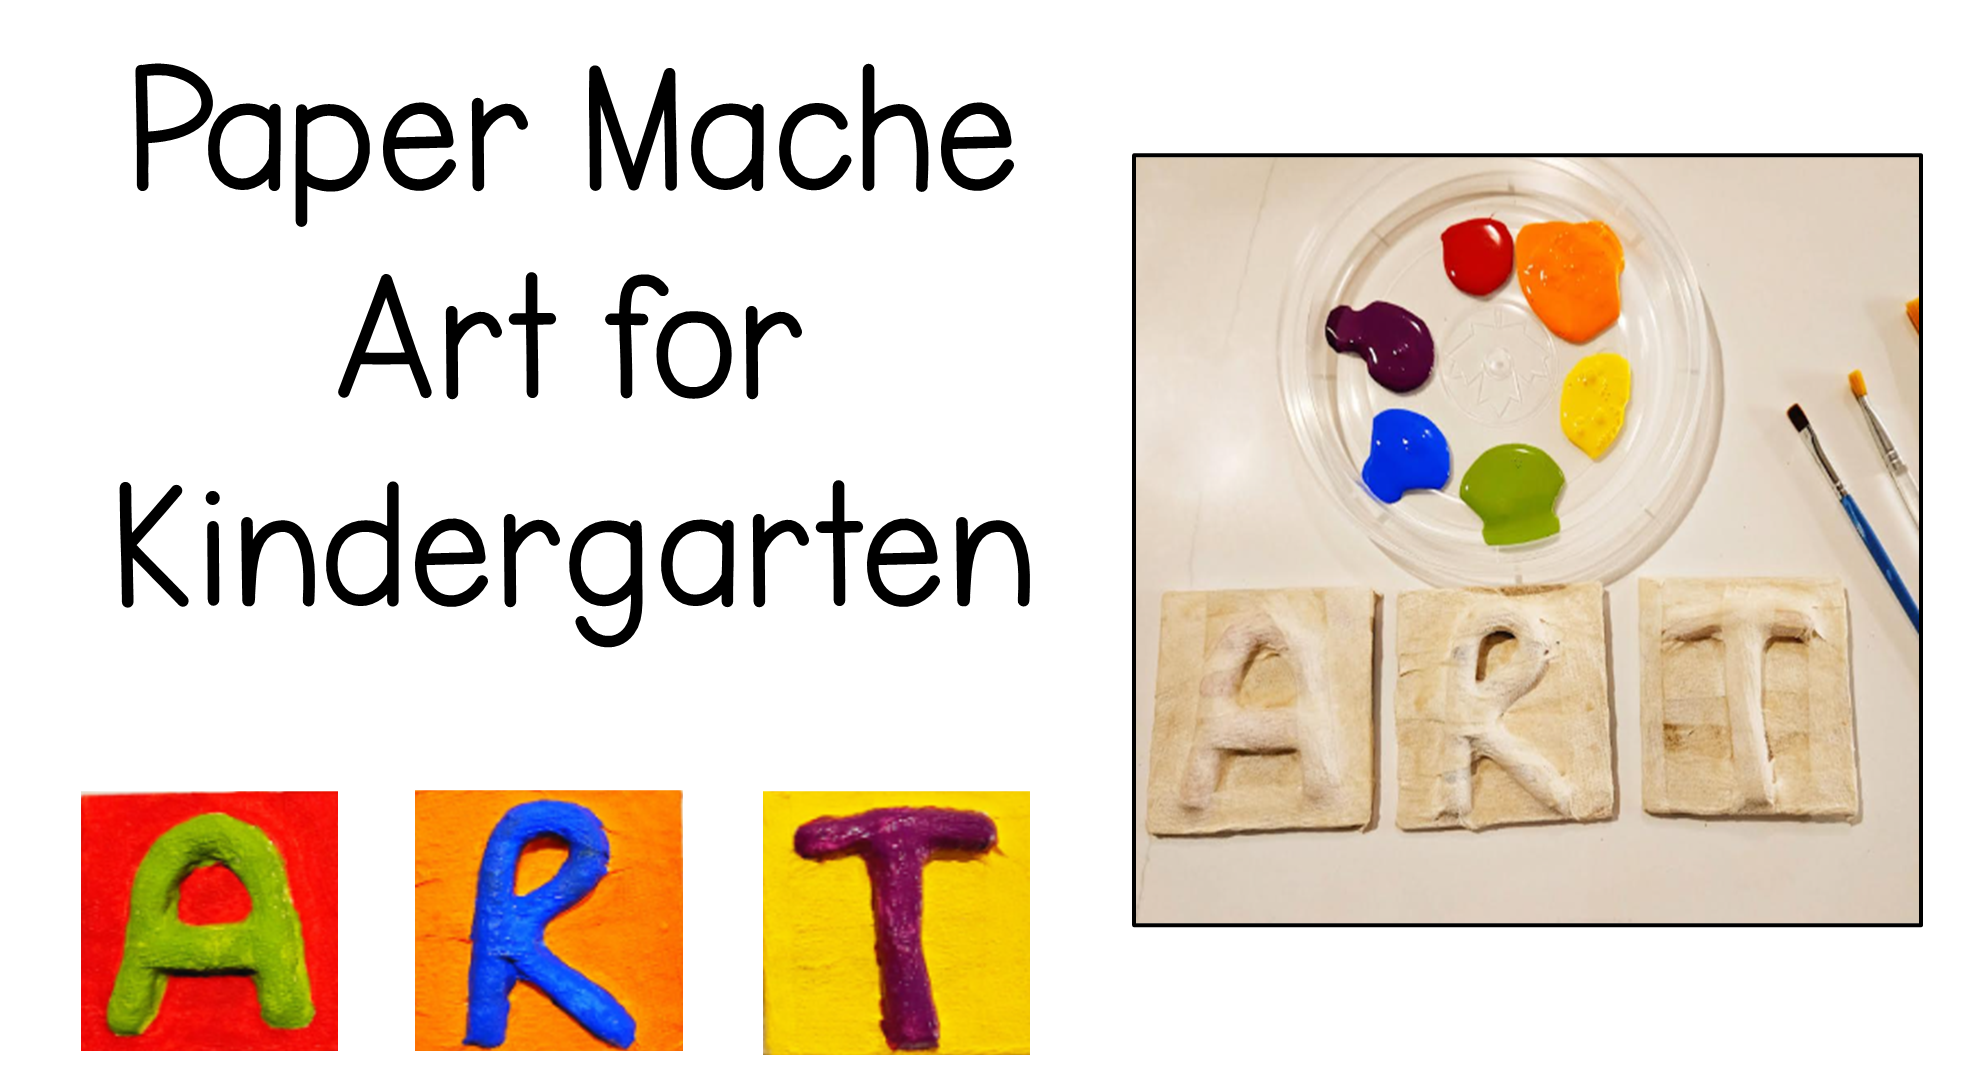 Paper Mache Art for Kindergarten and Kids(Free Printable Recipe)